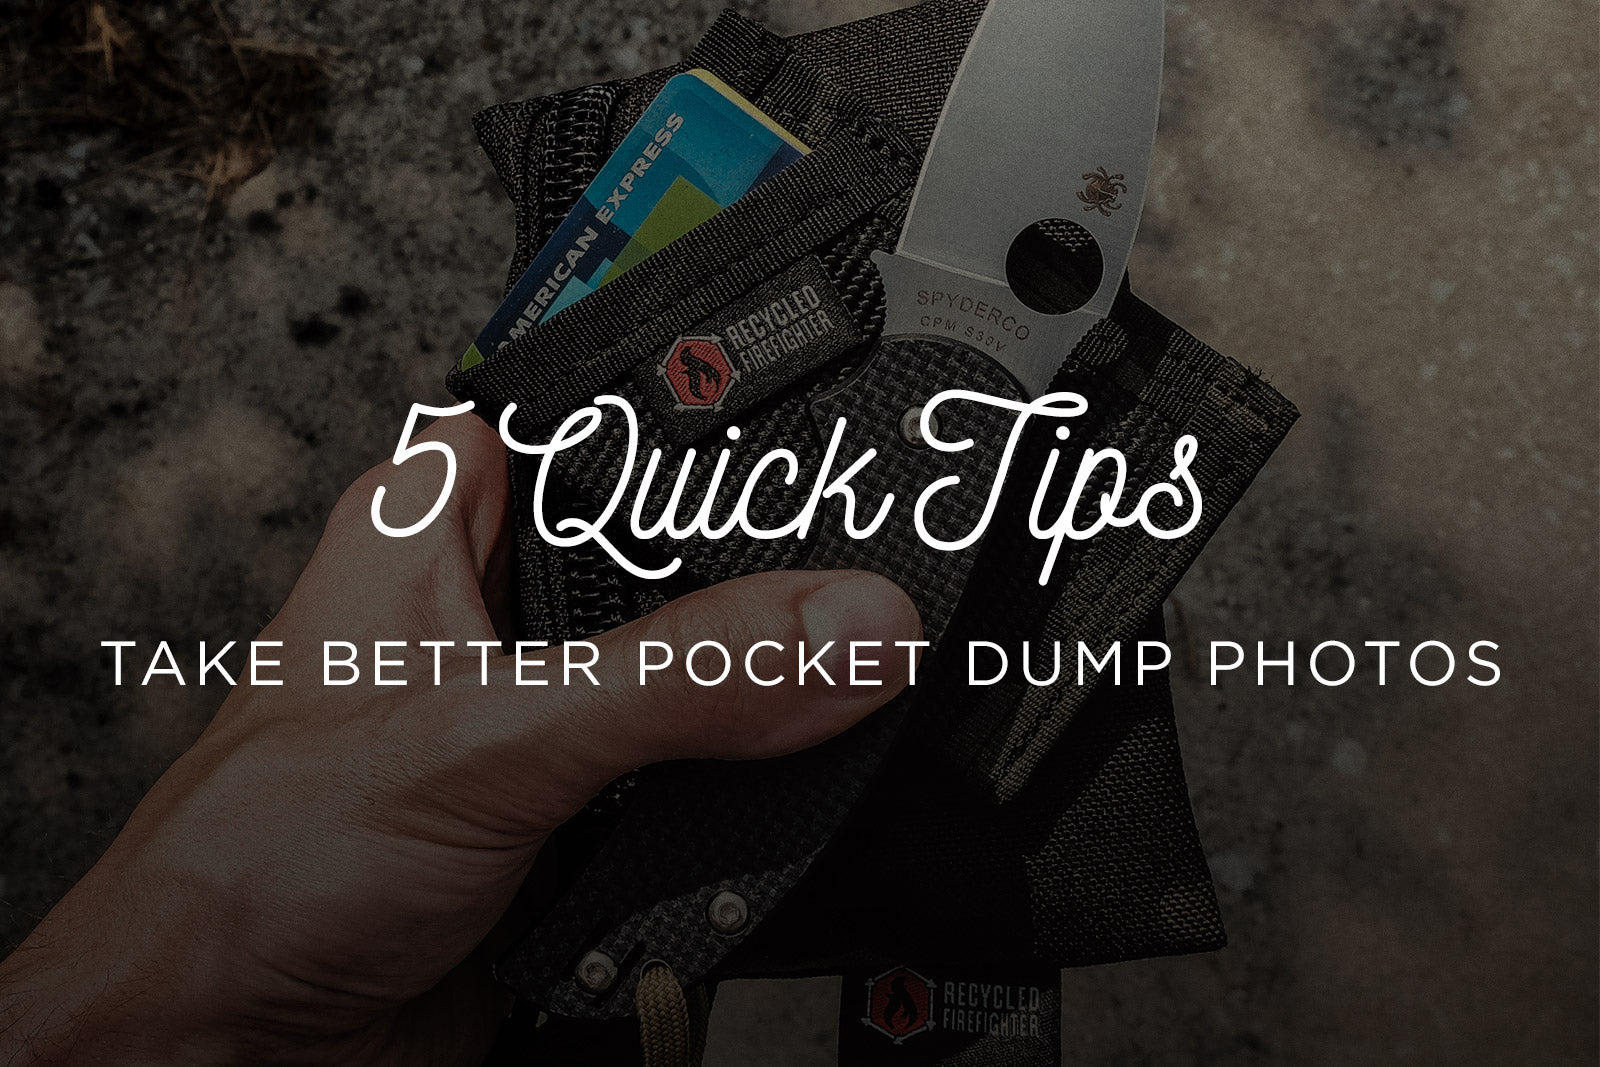 Take Better Pocket Dump Photos